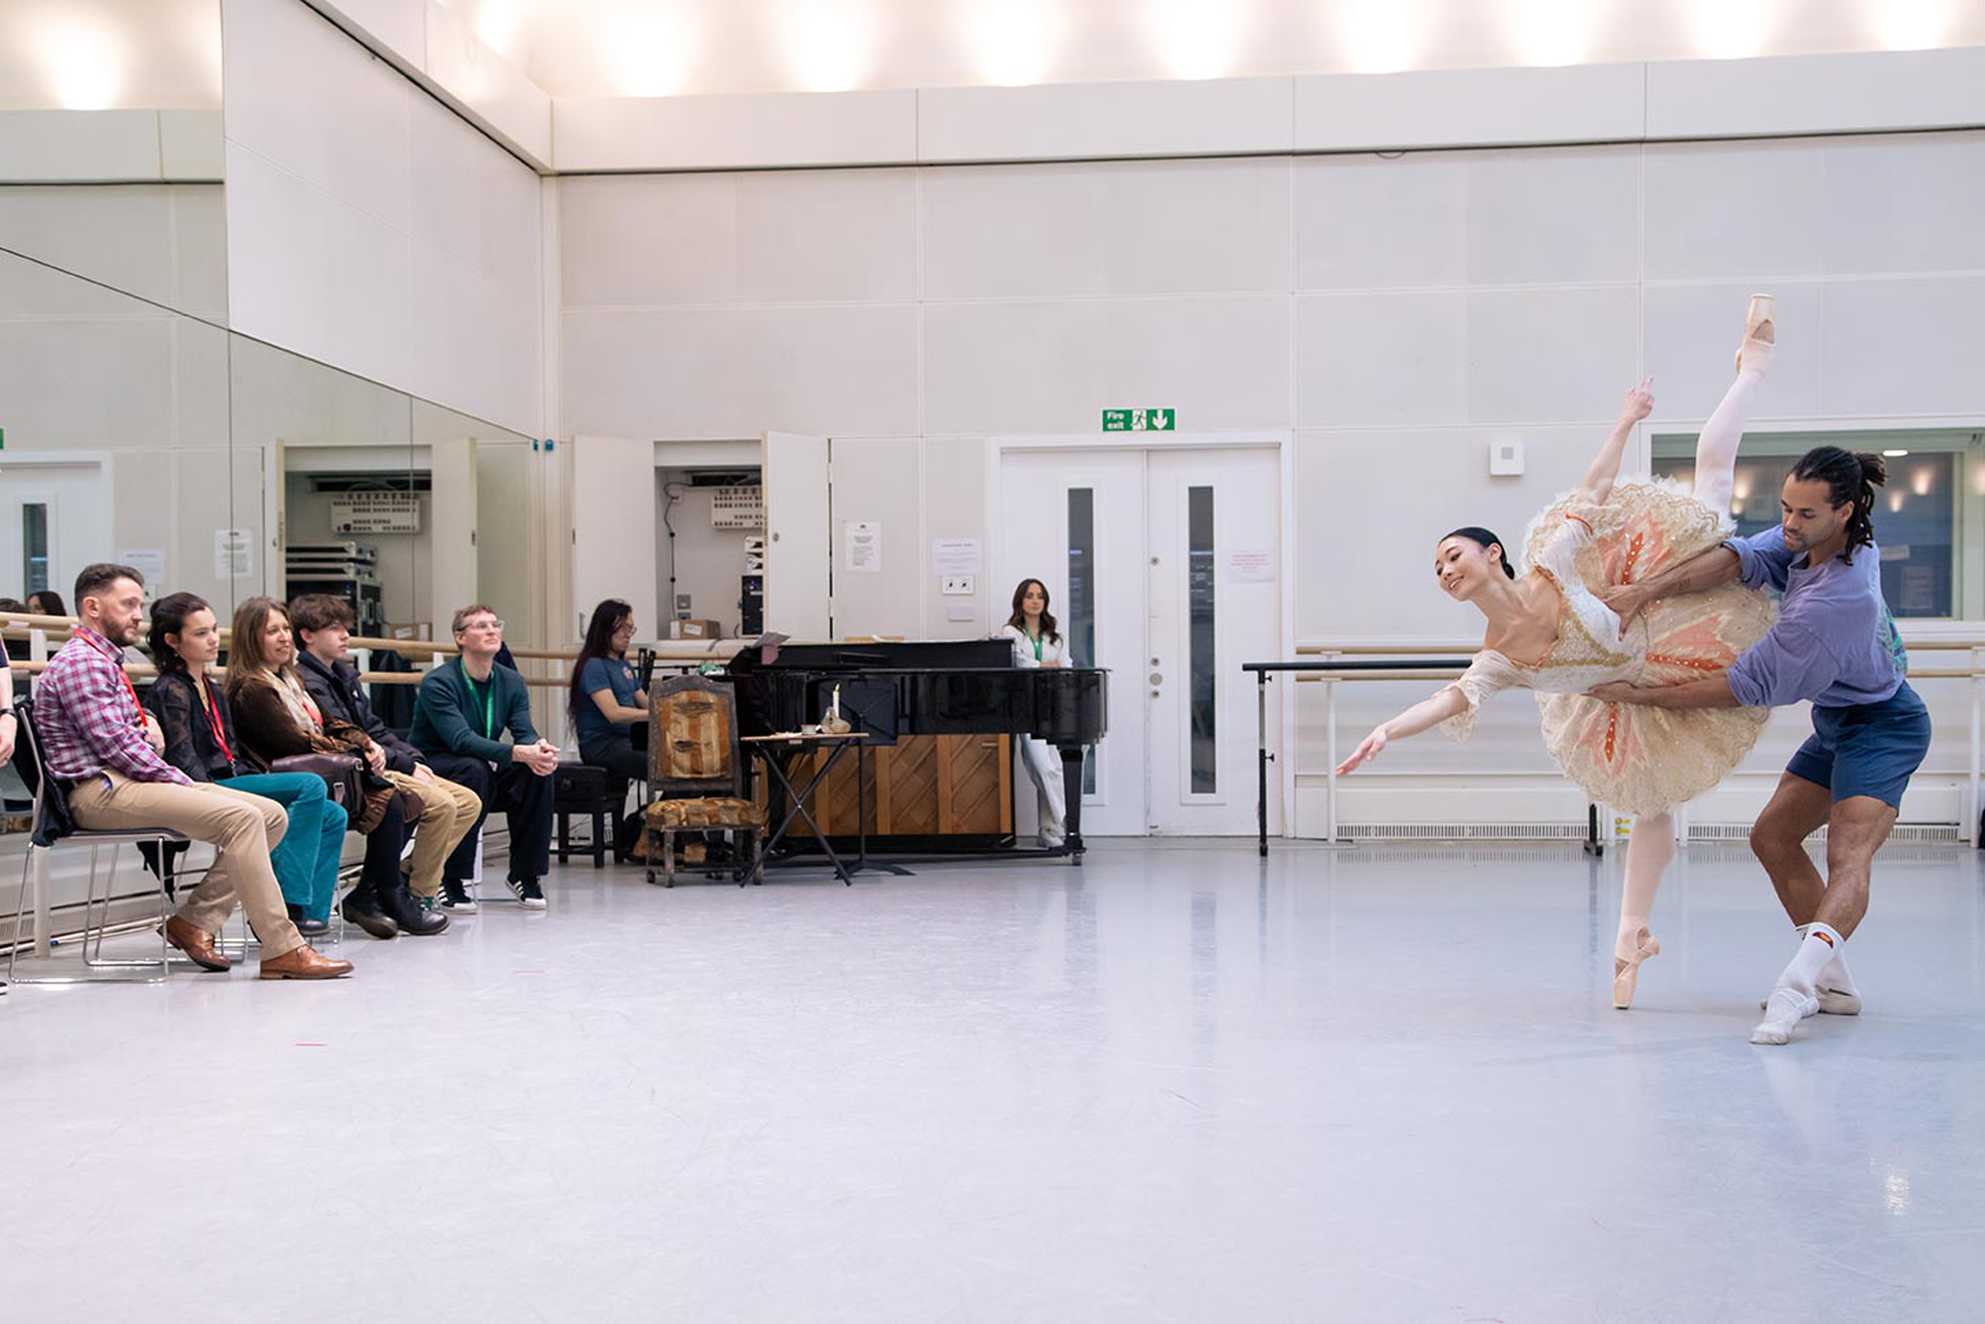 Izzy and her family watching Royal Ballet dancers Joseph Sissens and Mariko Sasaki rehearsing.